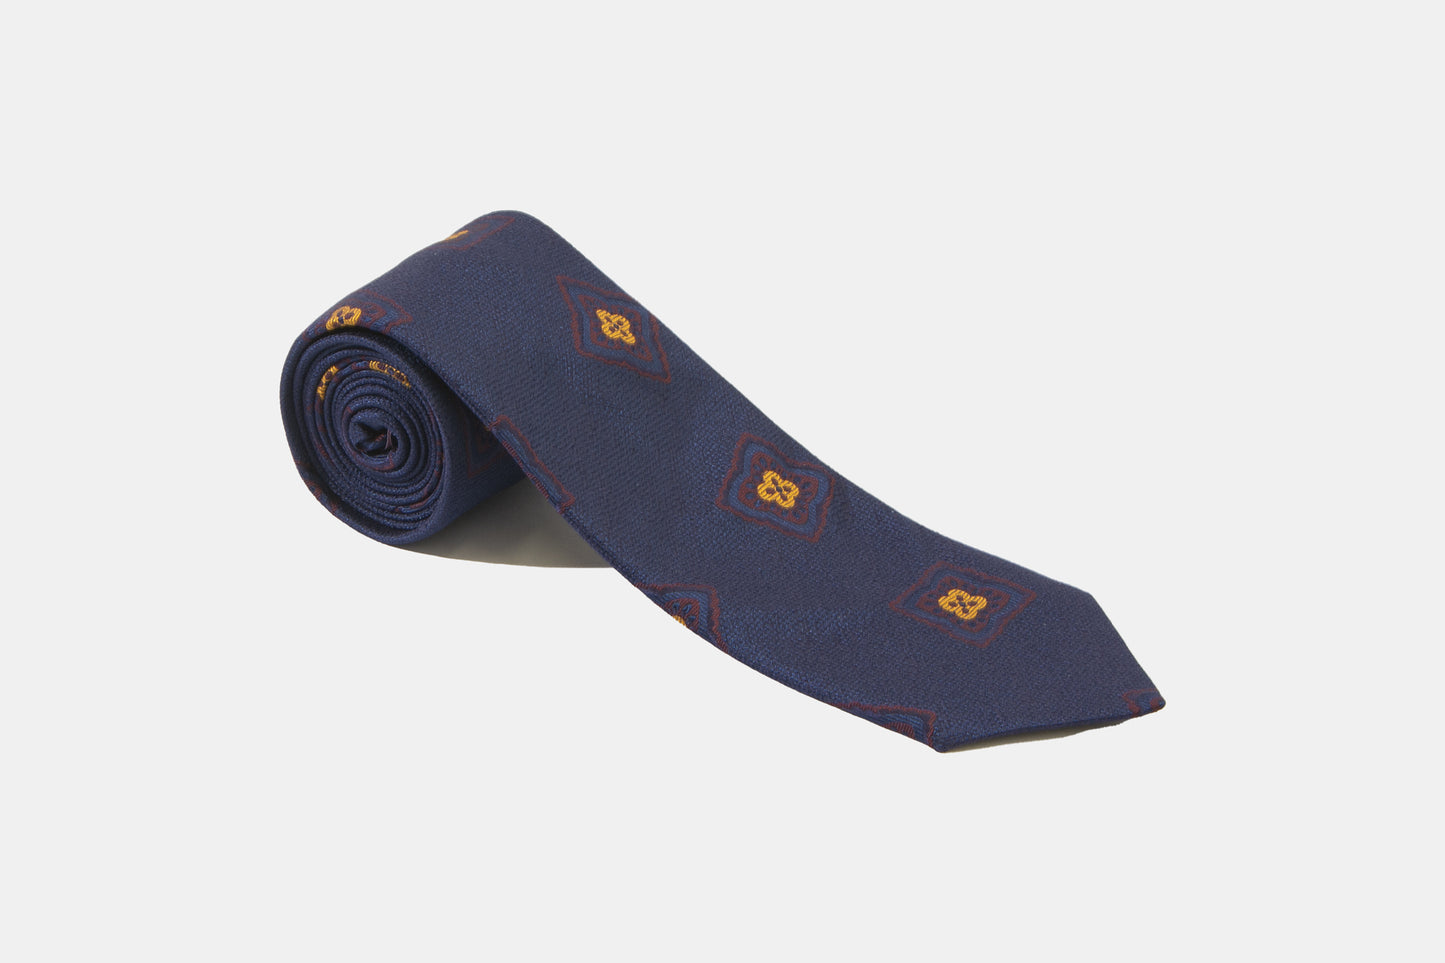 khakis of Carmel - mauve silk tie with pattern